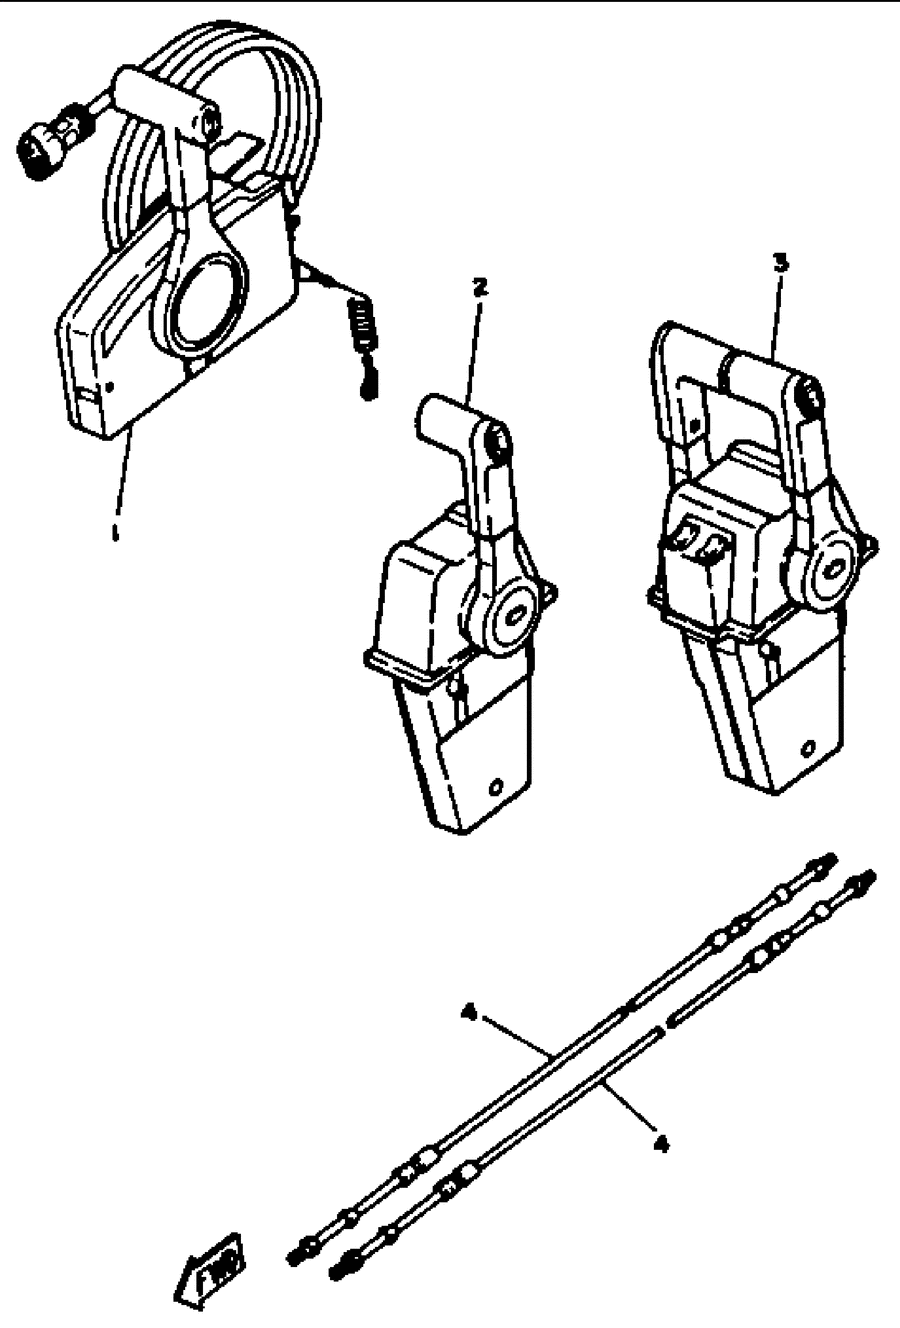 1991 L200TXRP REMOTE CONTROL CABLES